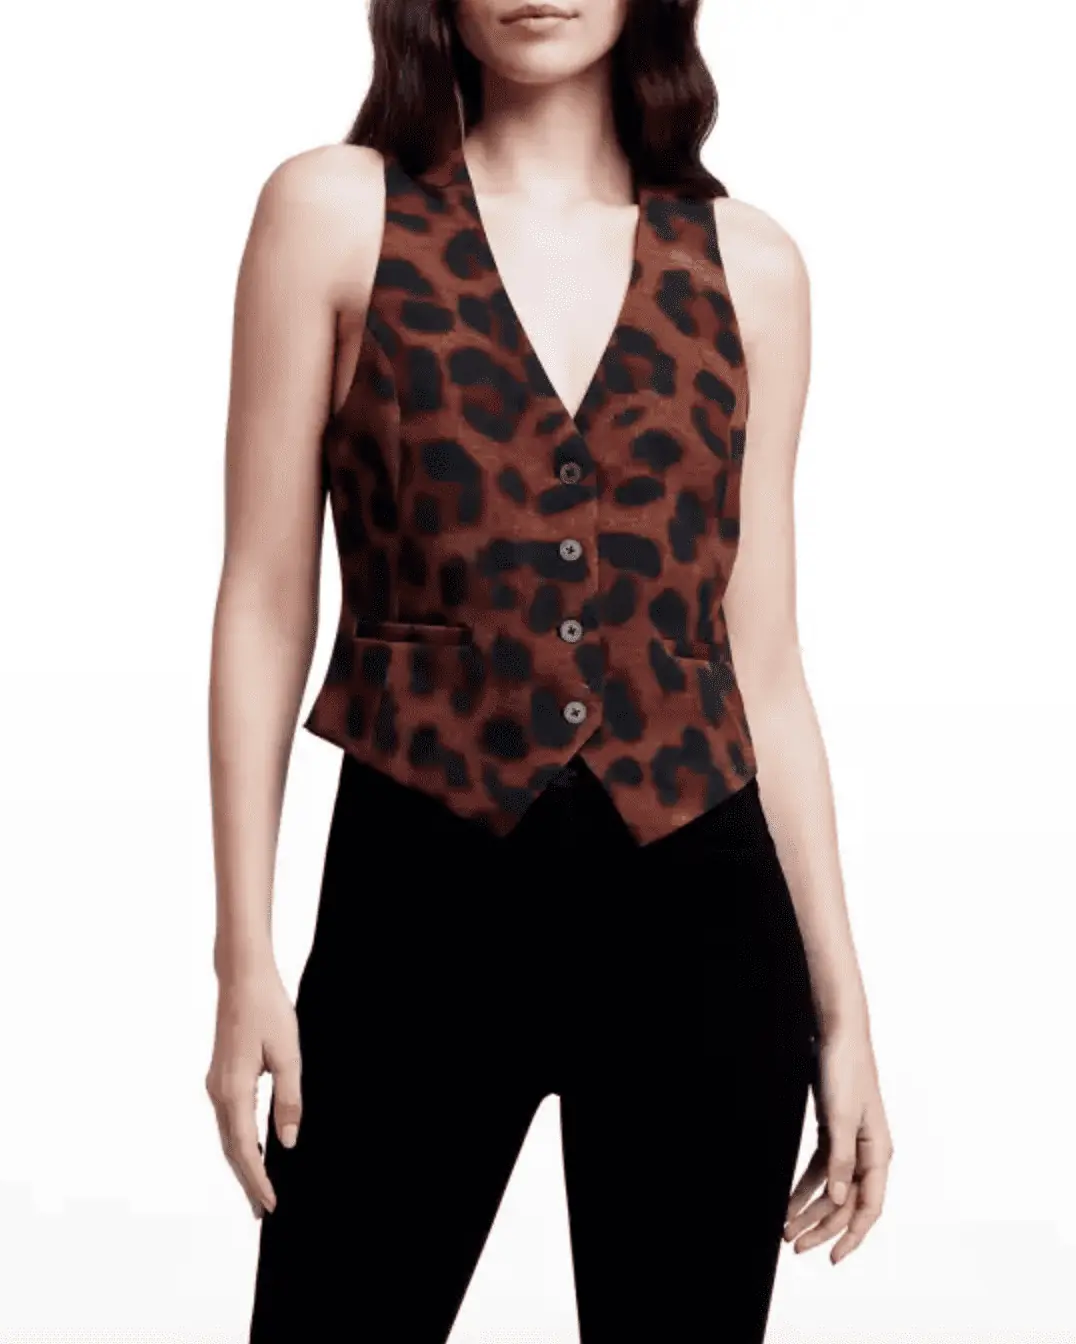 Heather Dubrow's Leopard Print Vest